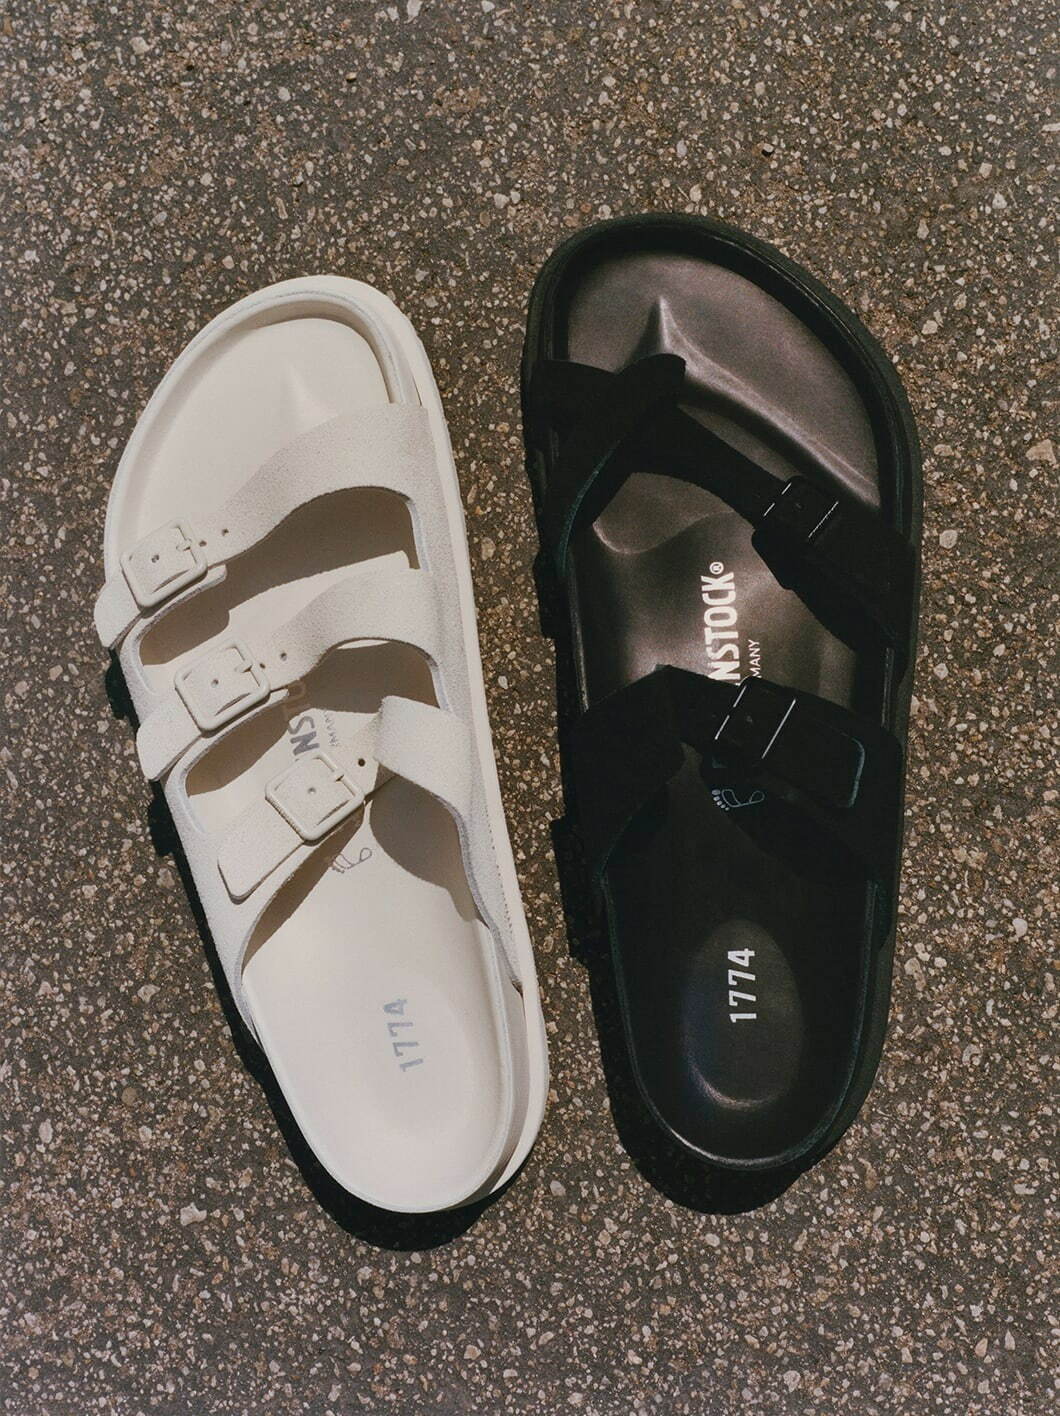 sandals, white sandals, black sandals